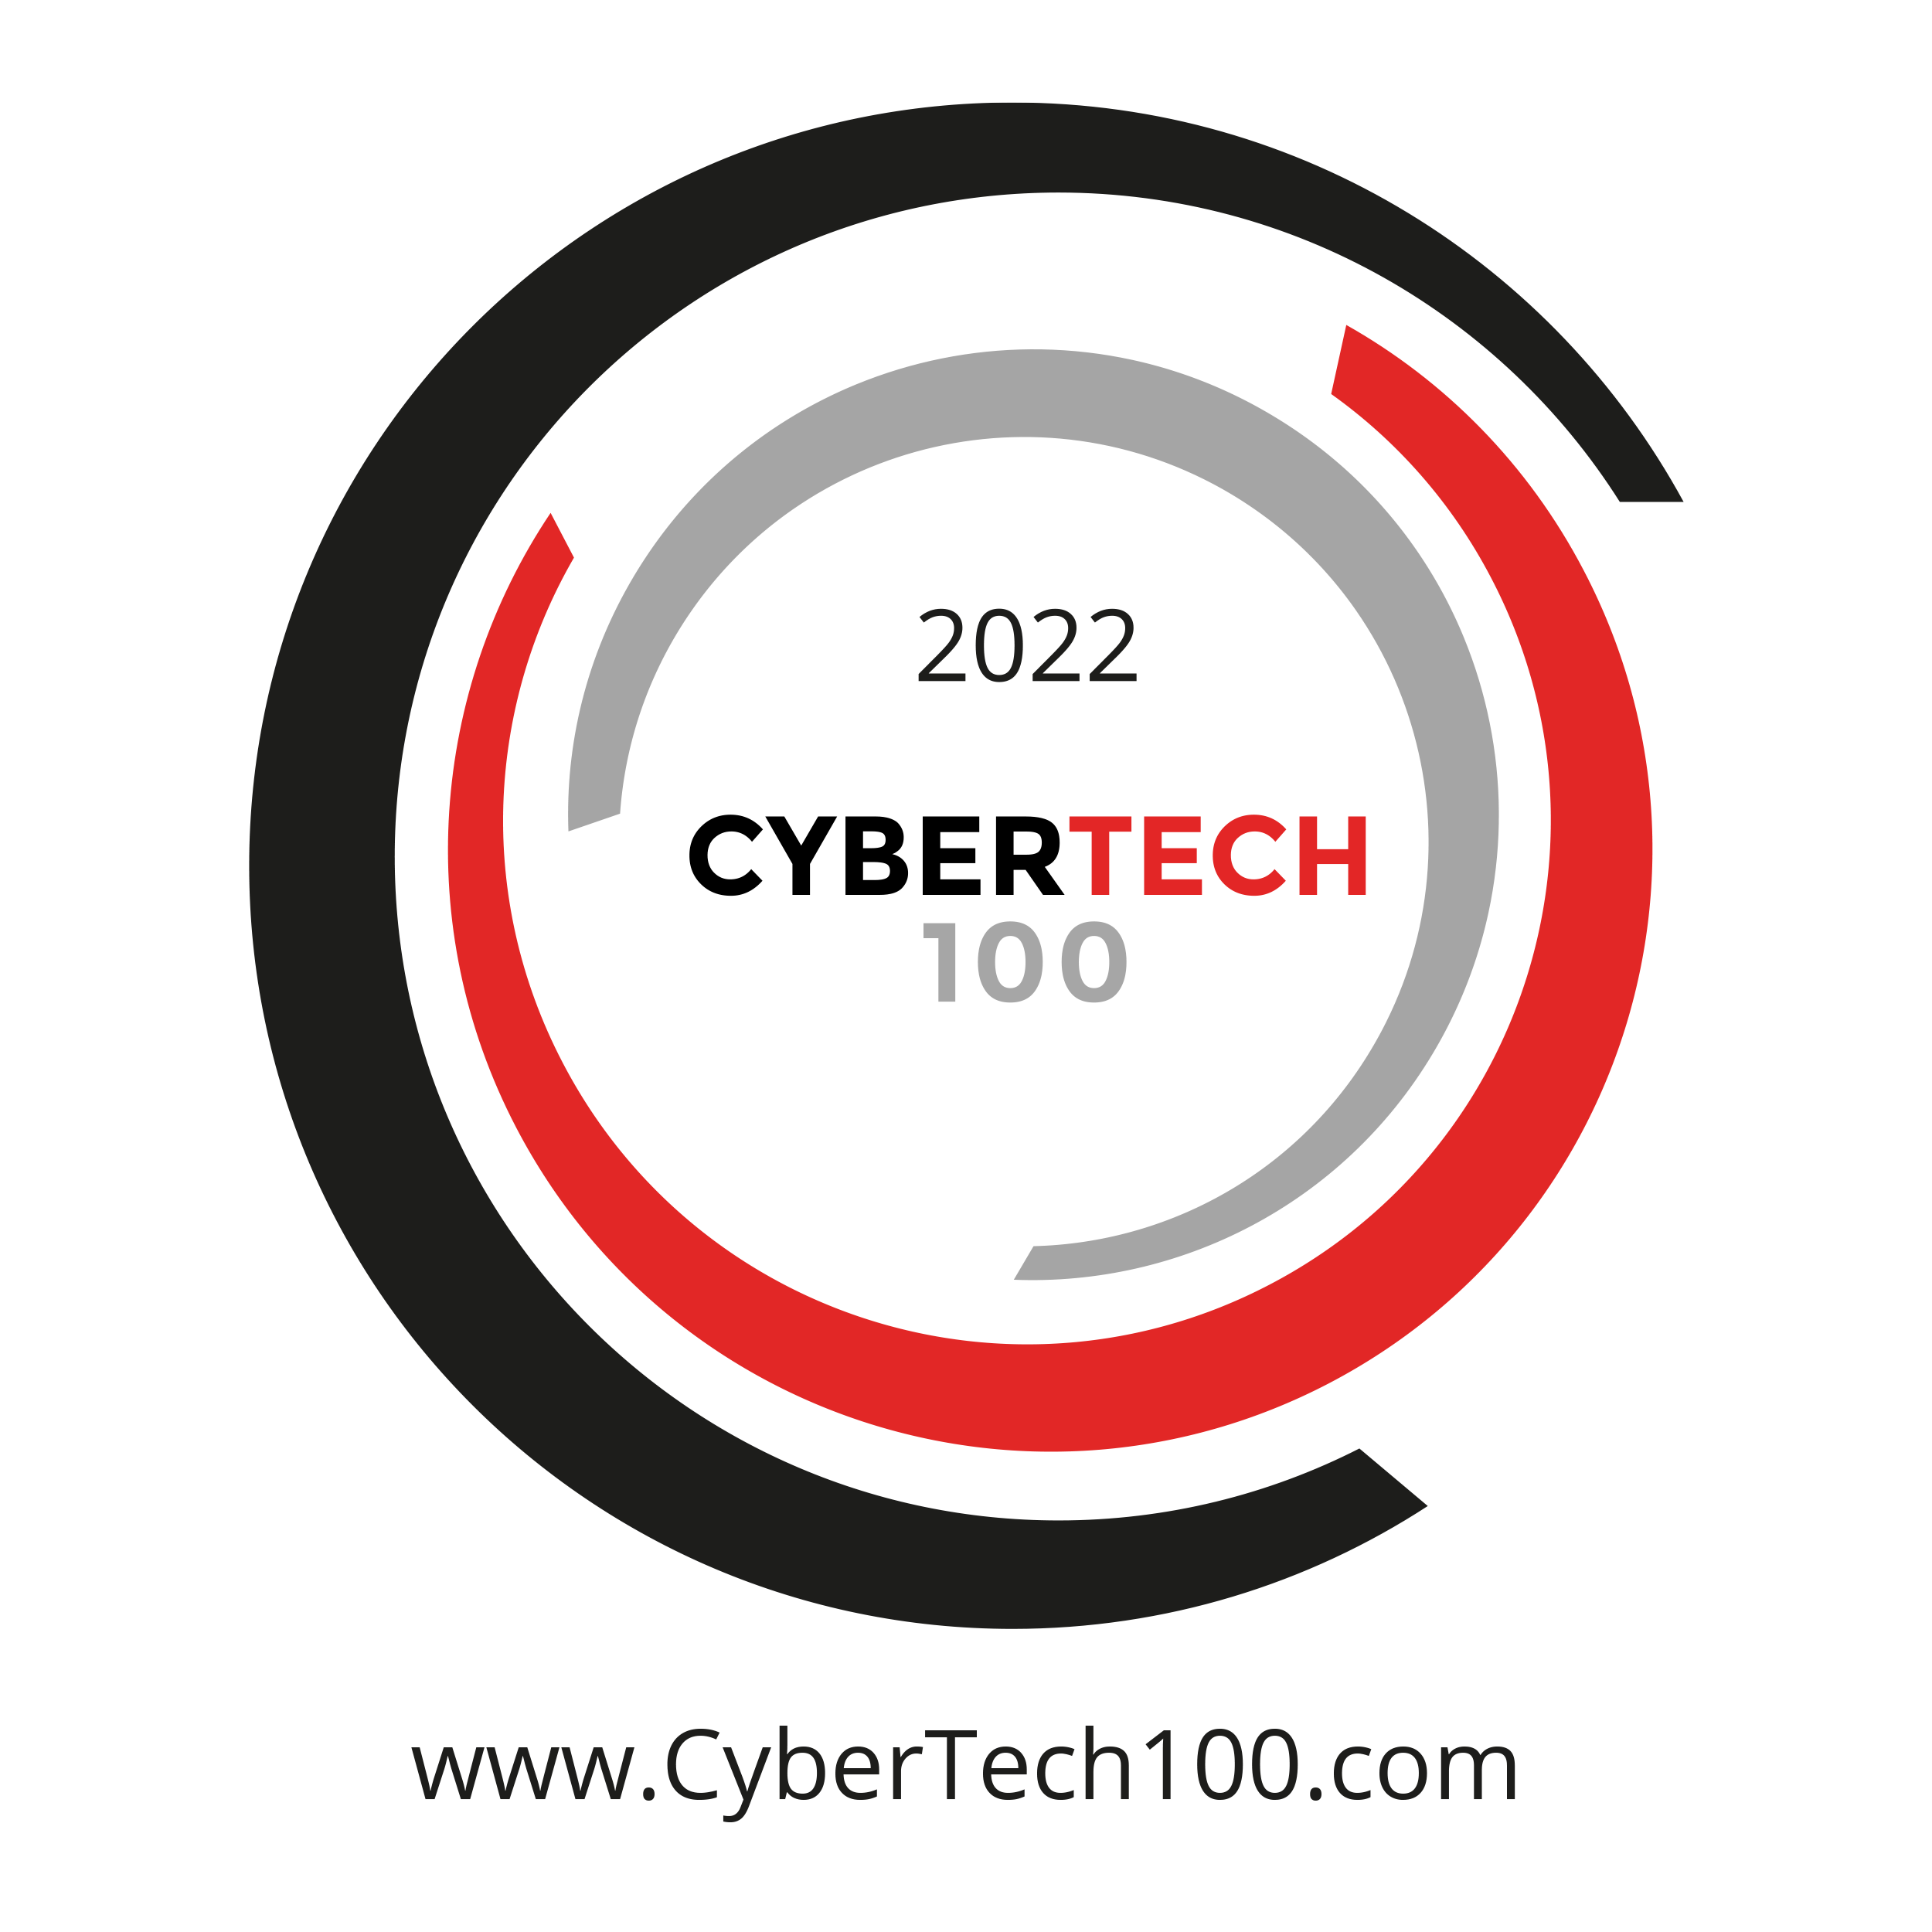 cybertech 100 20222 award badge